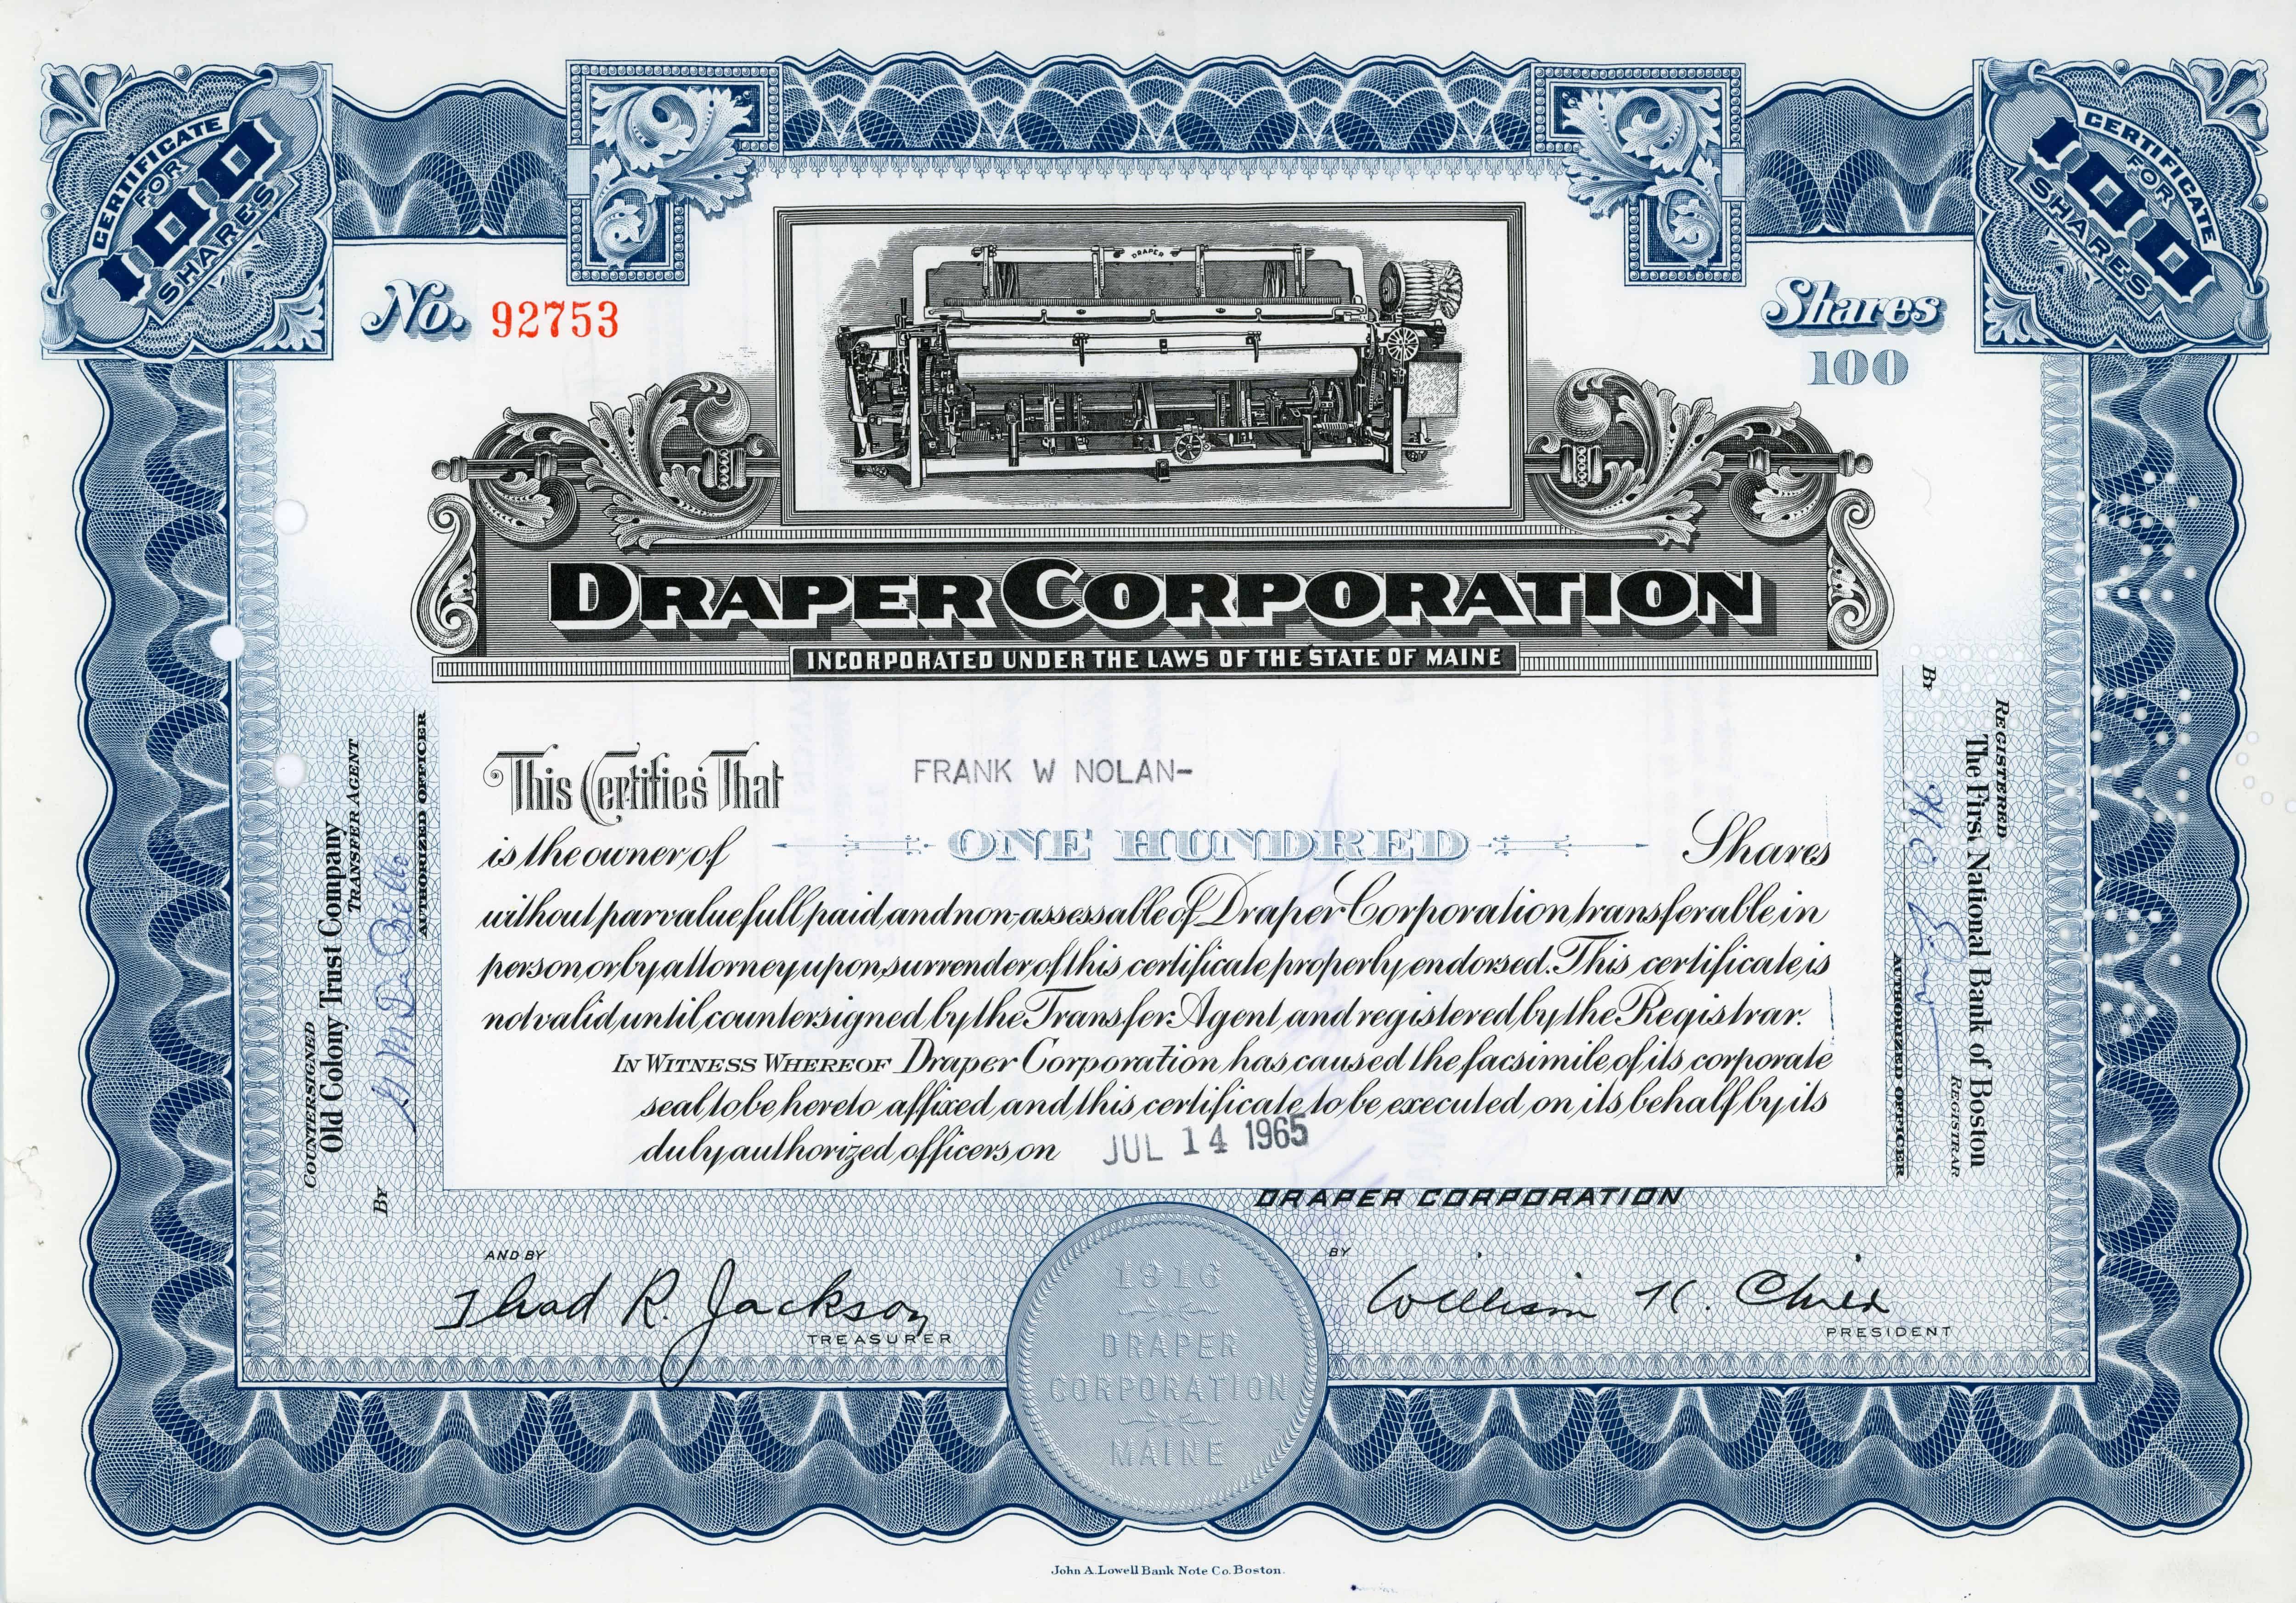 100 akcji Draper Corporation z 14 lipca 1965 roku